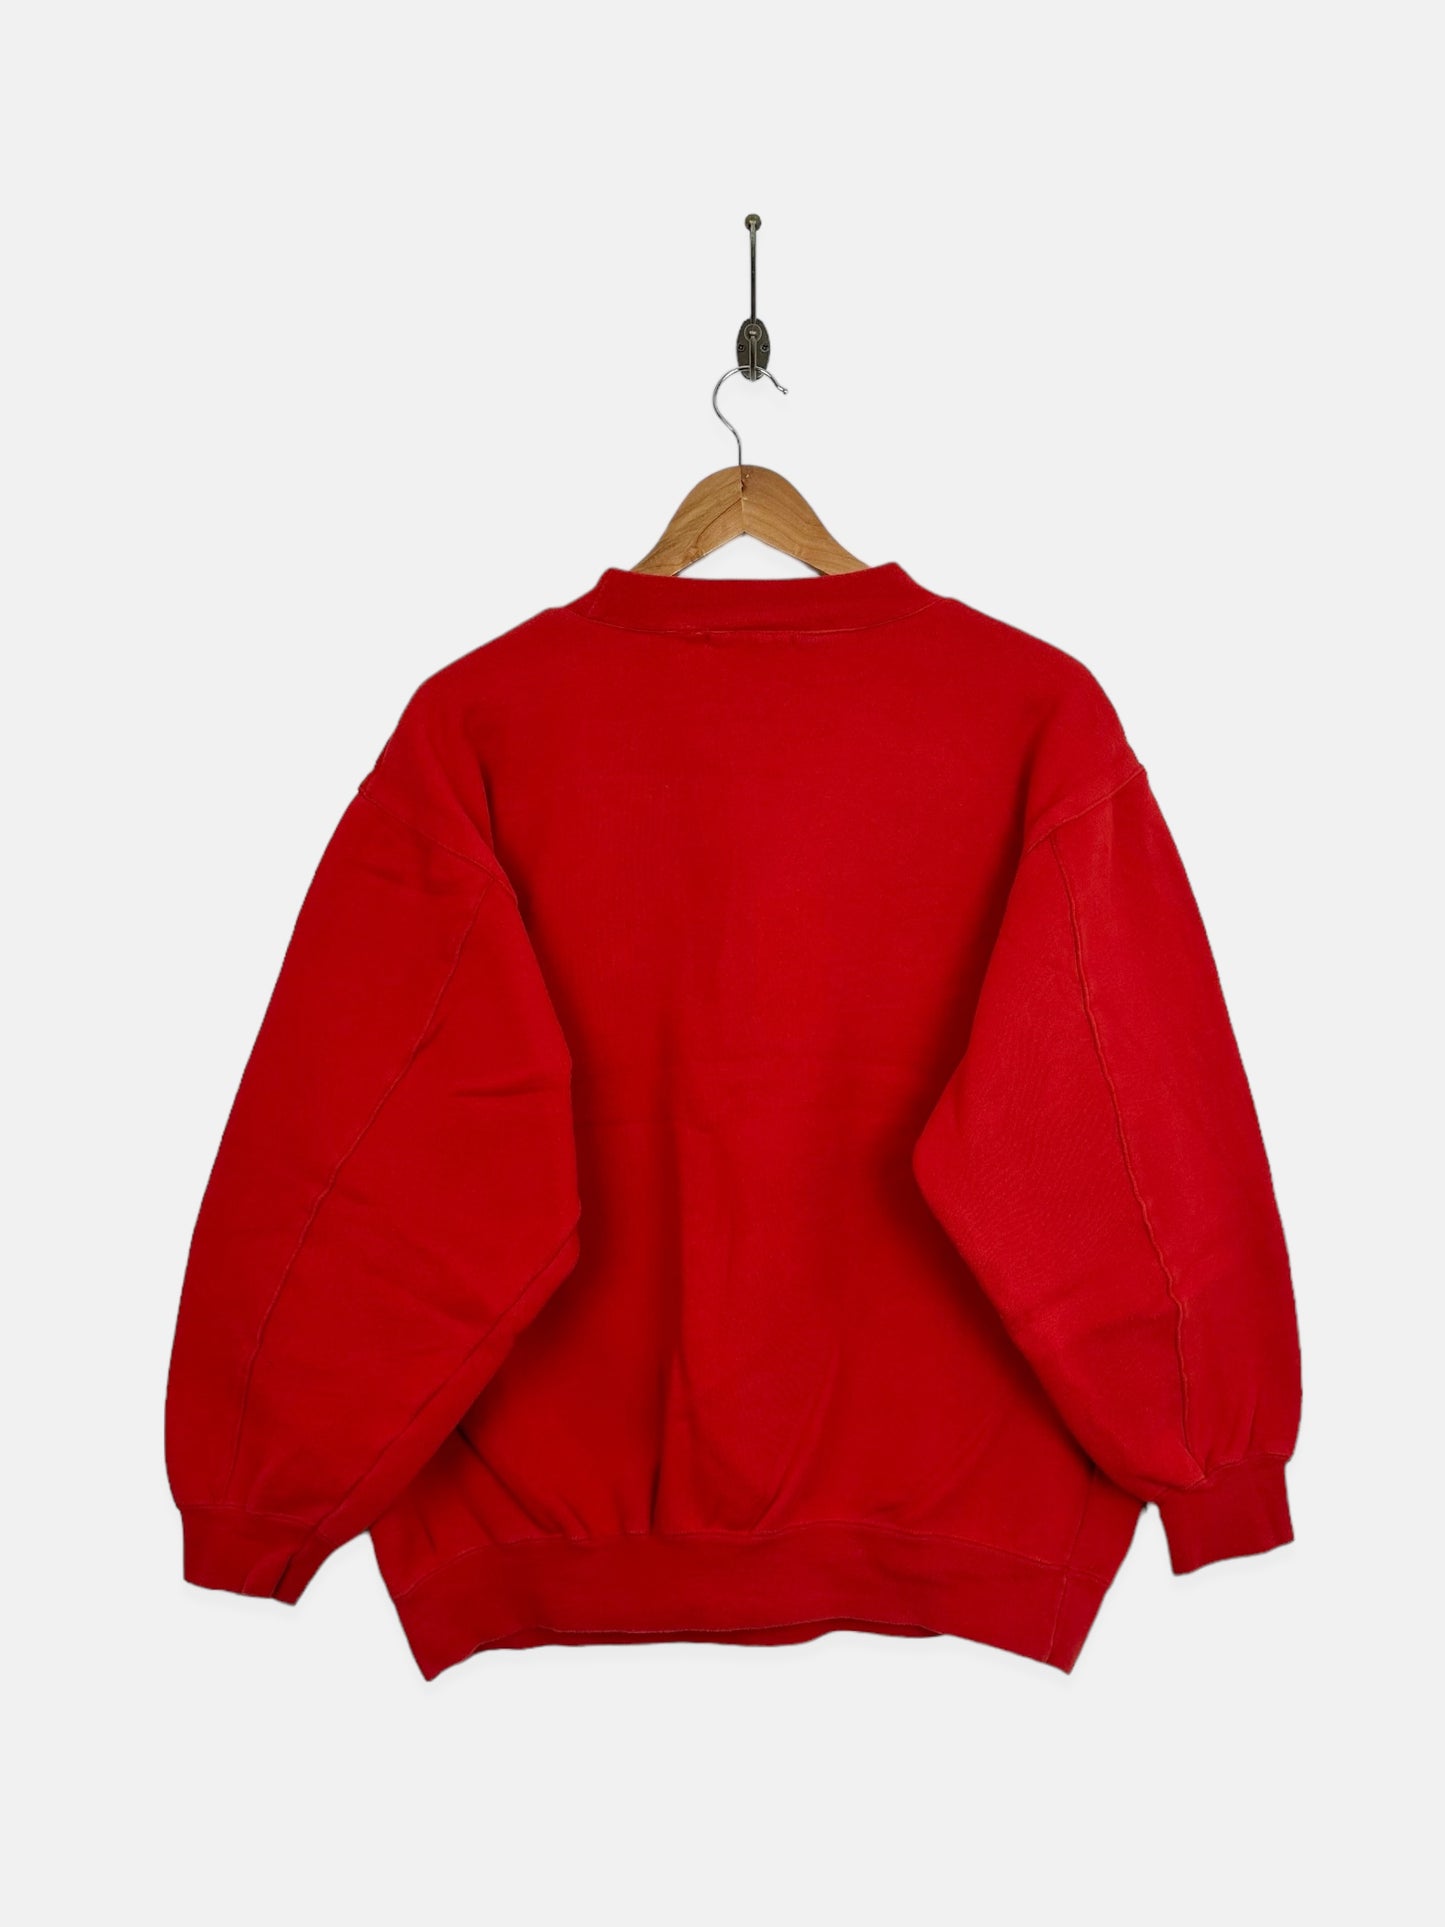 90's Nautica Embroidered Vintage Sweatshirt Size 10